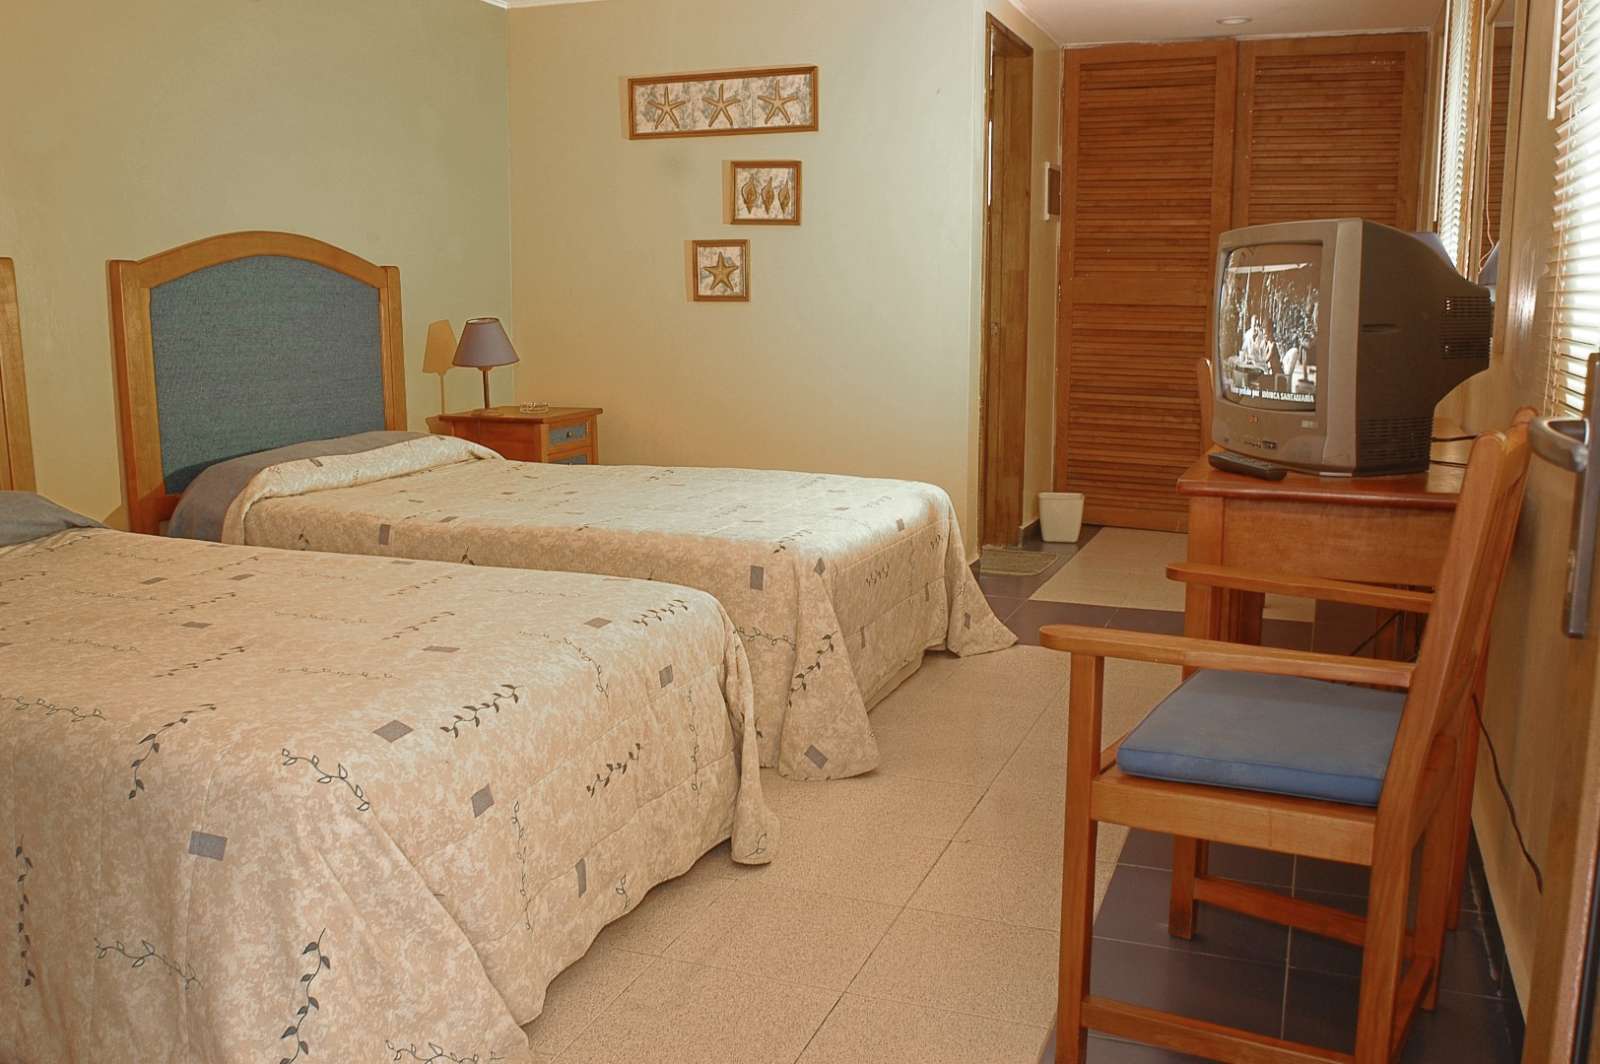 Standard room at Hotel Cayo Levisa in Cuba